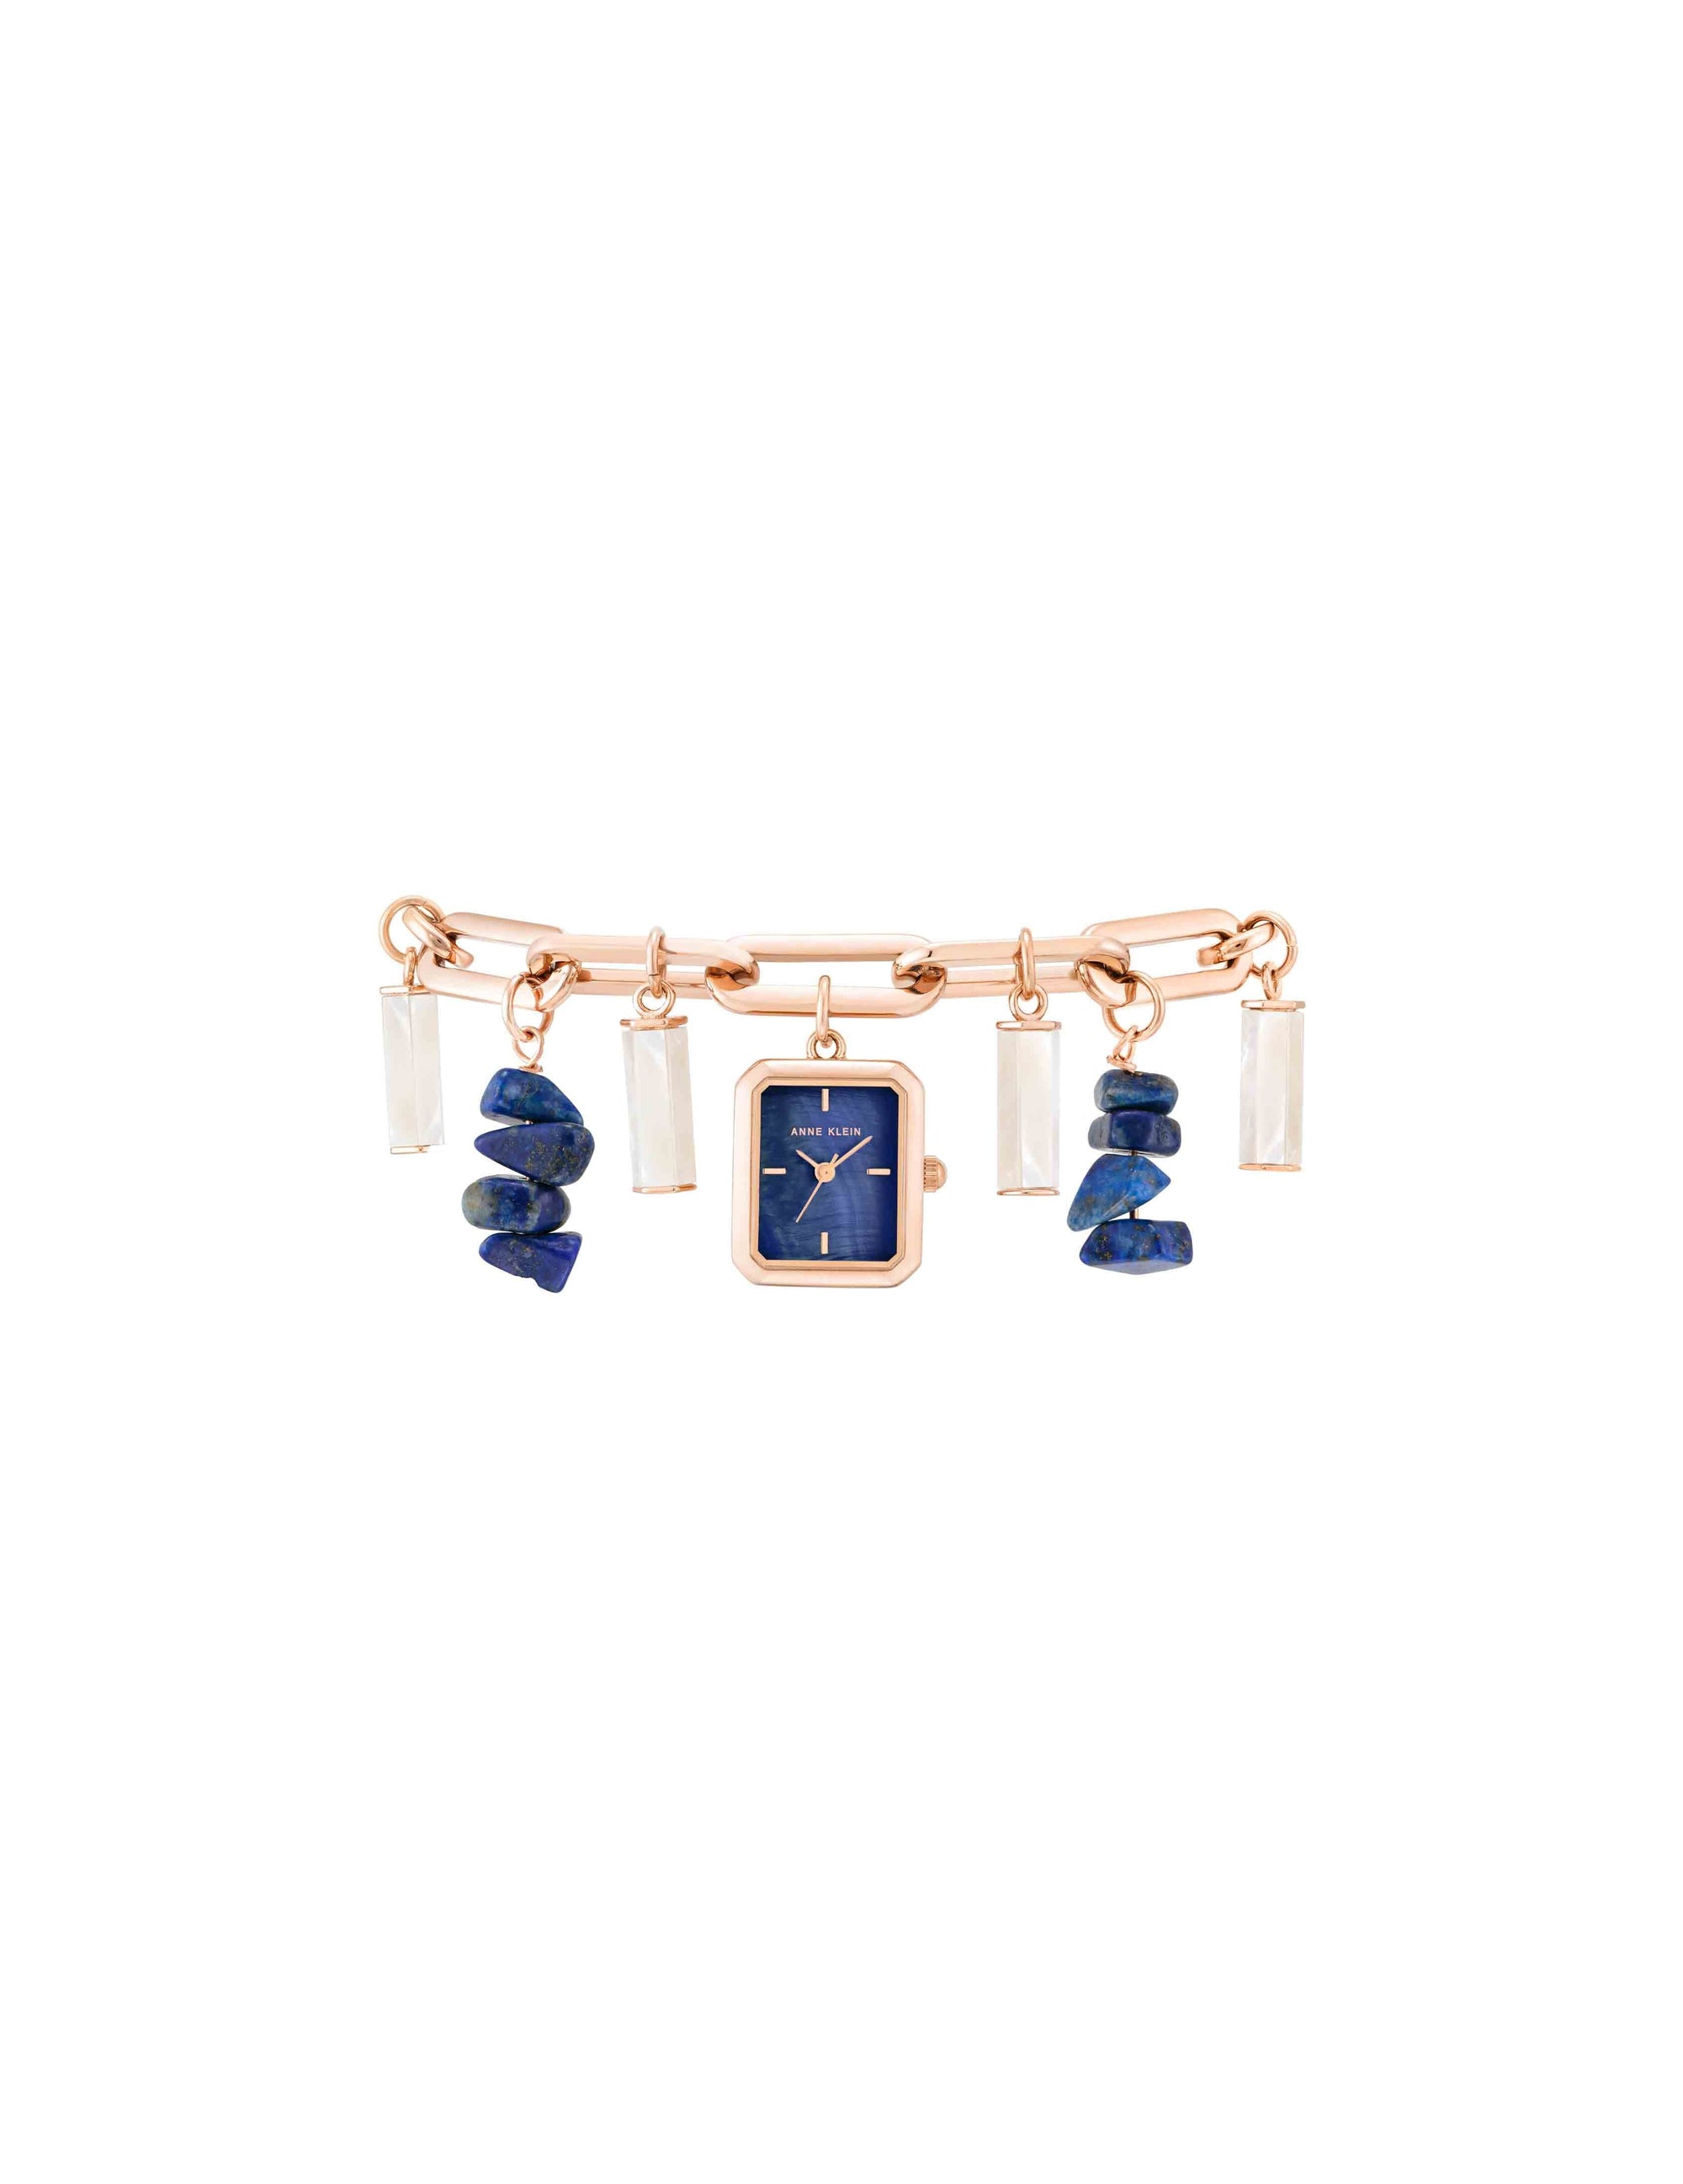 New Anne Klein Premium Crystal Accented Rose Gold-Tone Charm Bracelet Watch  | Charm bracelet watch, Charm bracelet, Bracelet watch